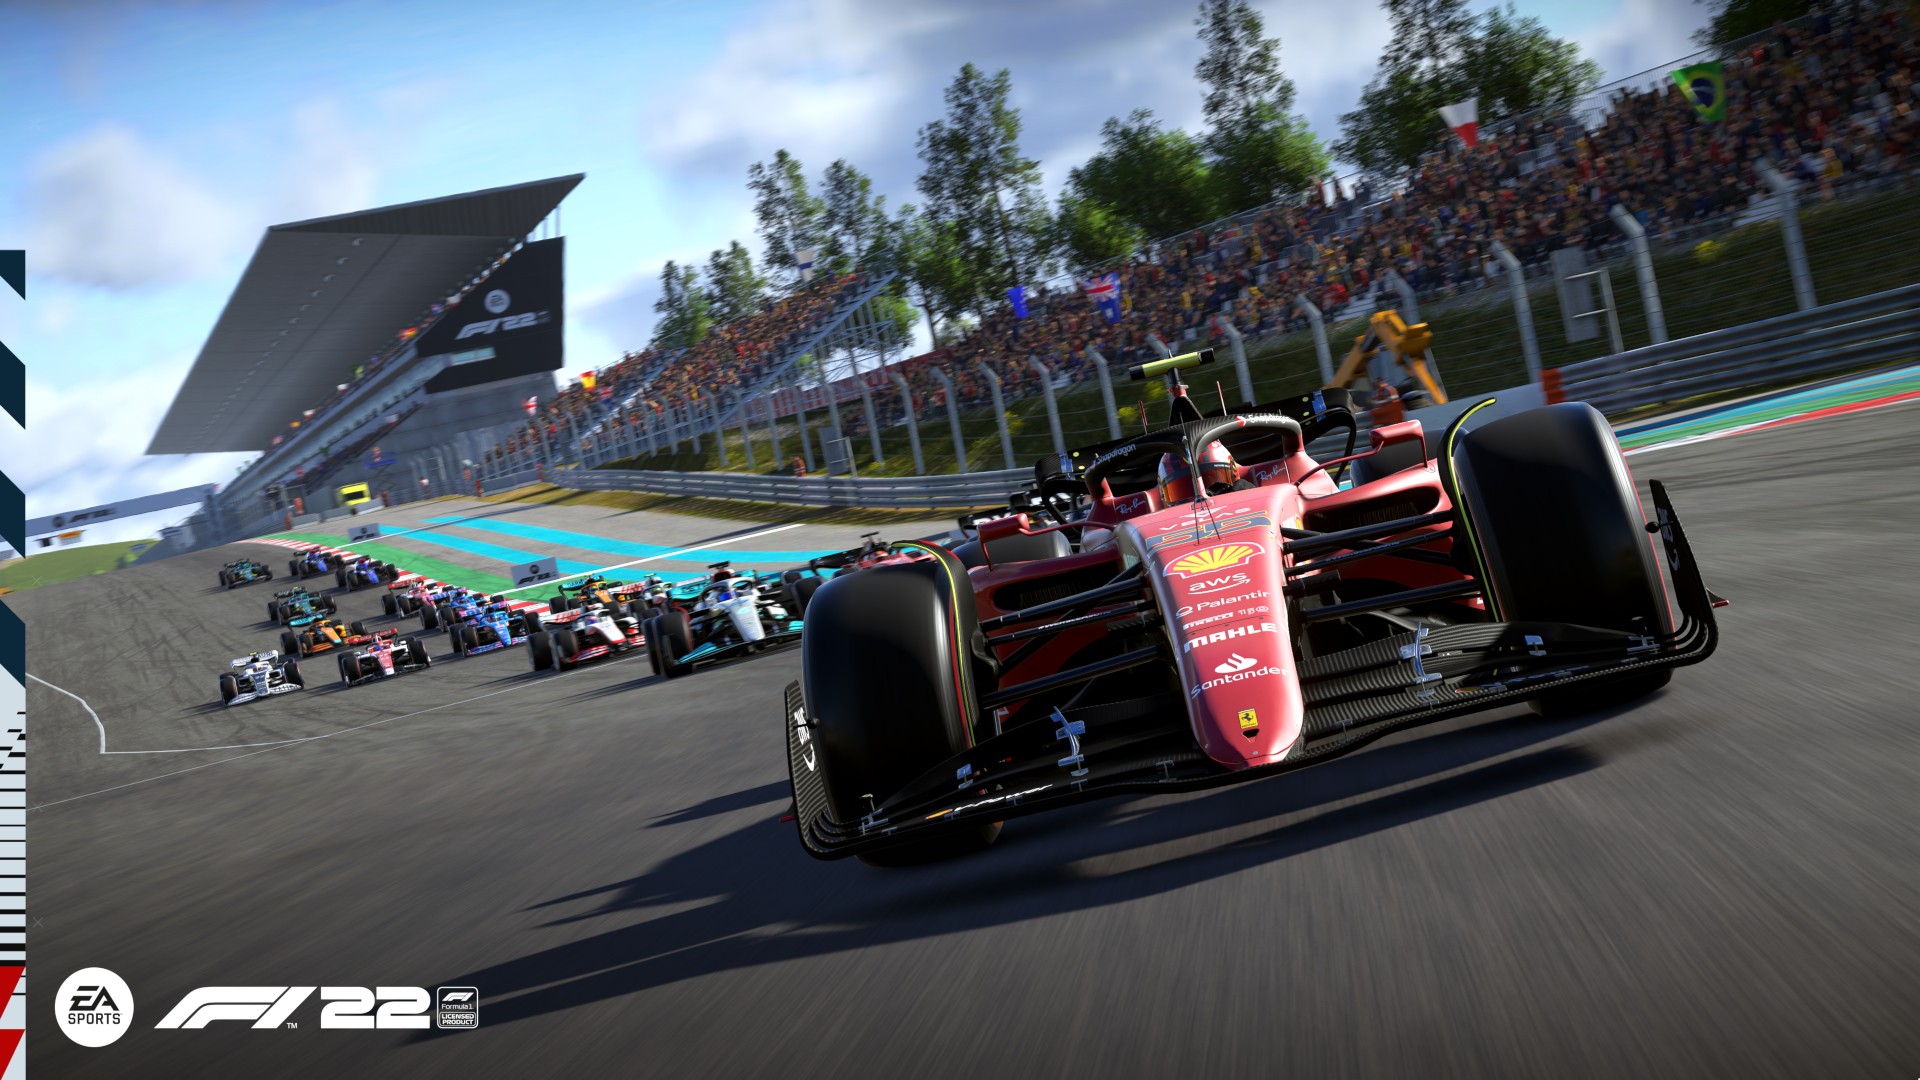 F1 22 cross-platform multiplayer arrives this month